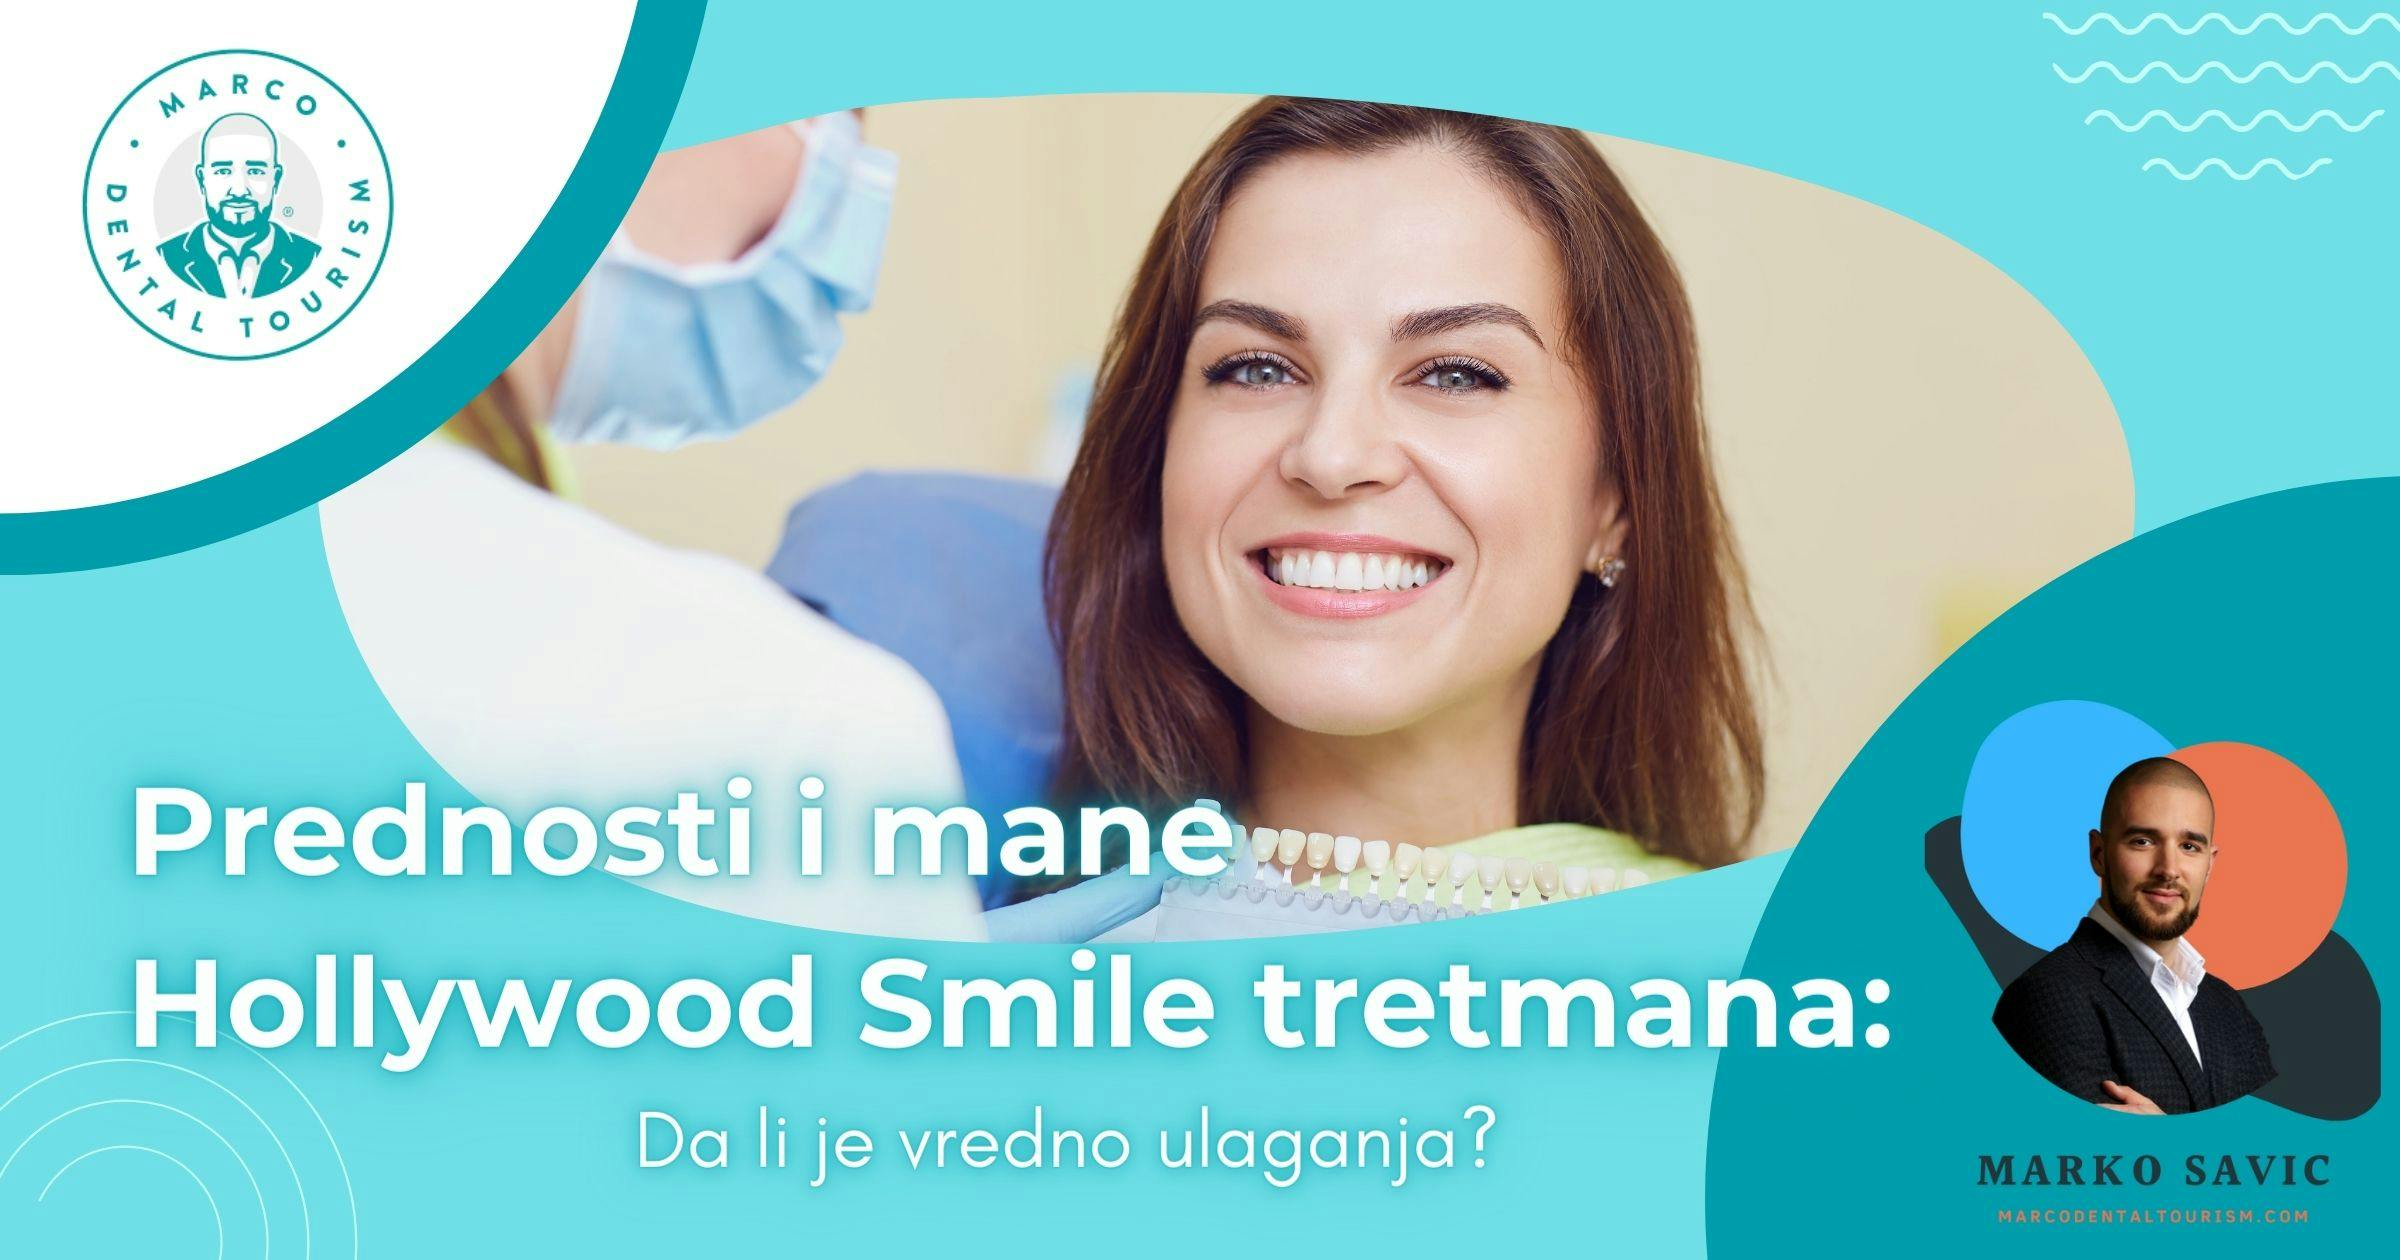 Prednosti i mane Hollywood Smile tretmana - Marco Dental Tourism